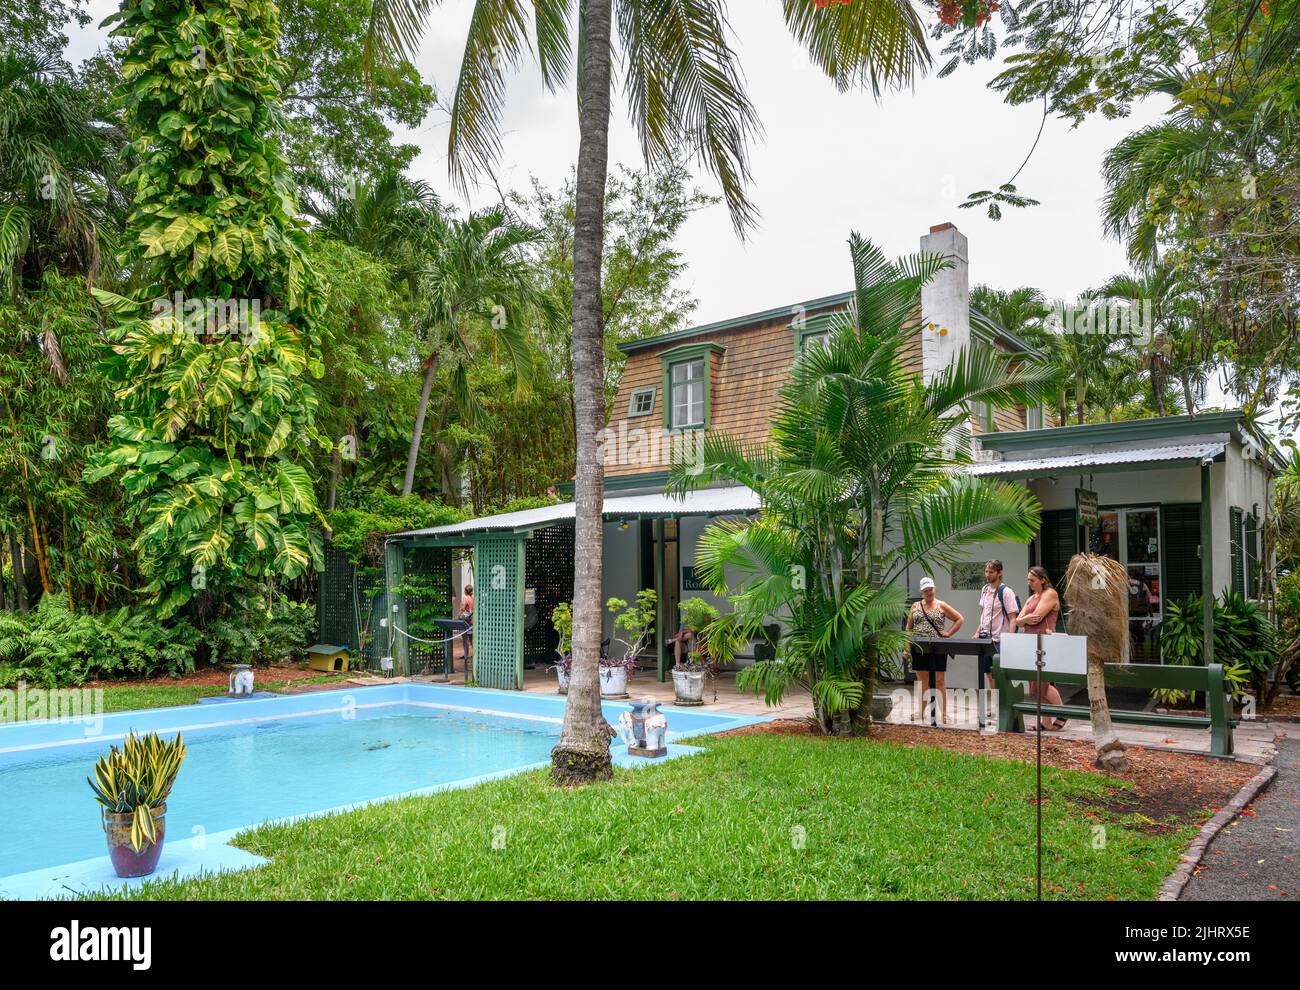 The Hemingway Home and Museum, Whitehead Street, Key West, Florida Keys, Floride, ÉTATS-UNIS Banque D'Images